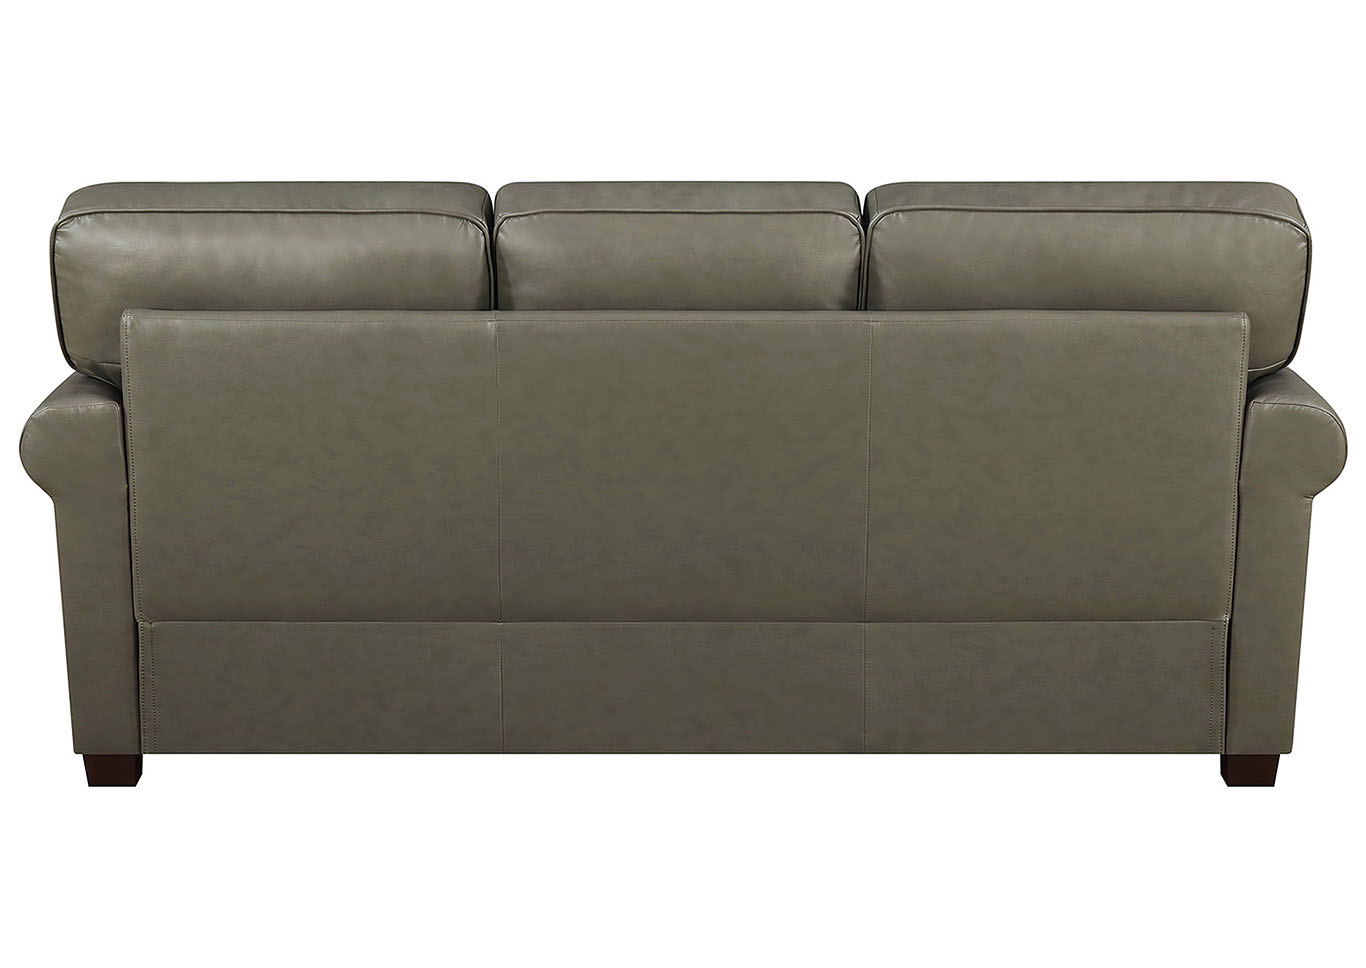 April Gray Leather Match Stationary Sofa,Taba Home Furnishings